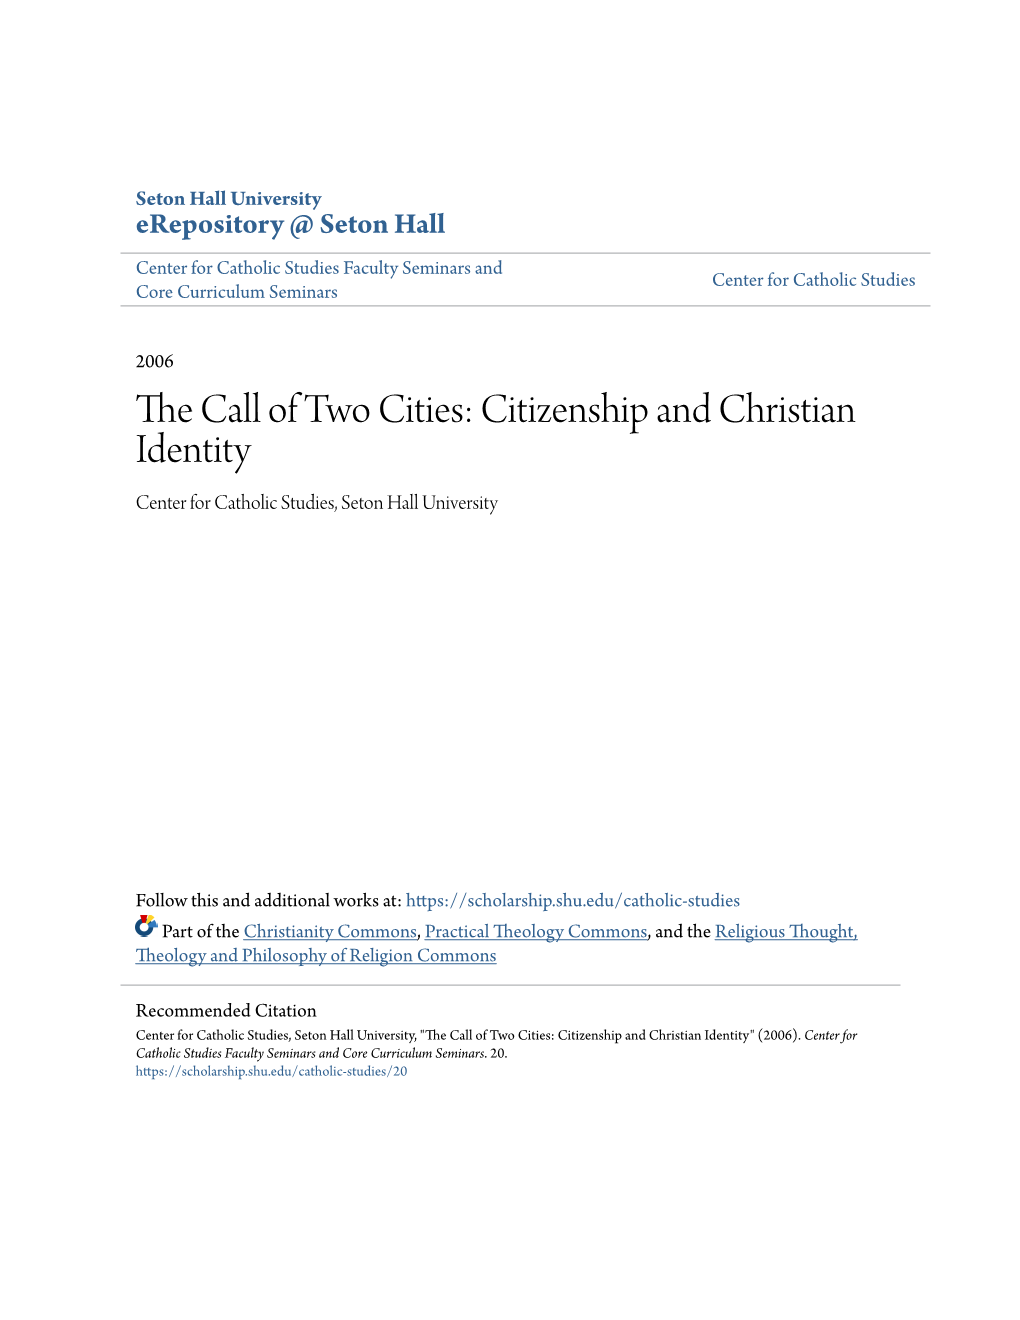 Citizenship and Christian Identity Center for Catholic Studies, Seton Hall University